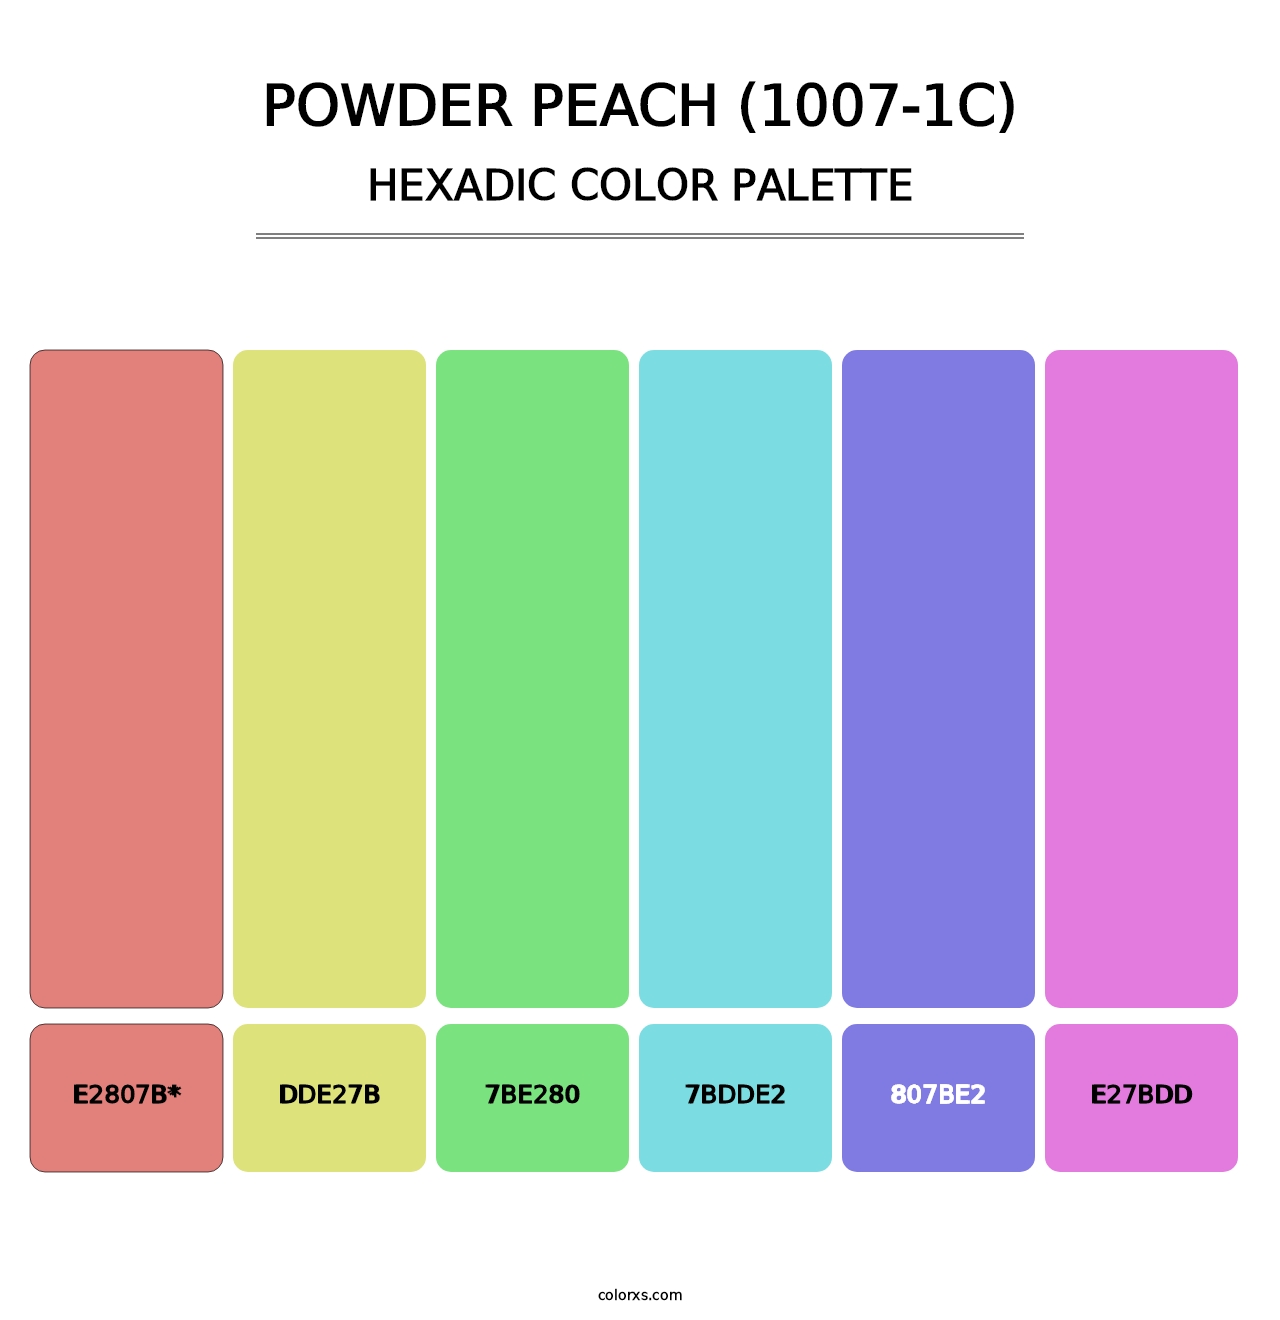 Powder Peach (1007-1C) - Hexadic Color Palette